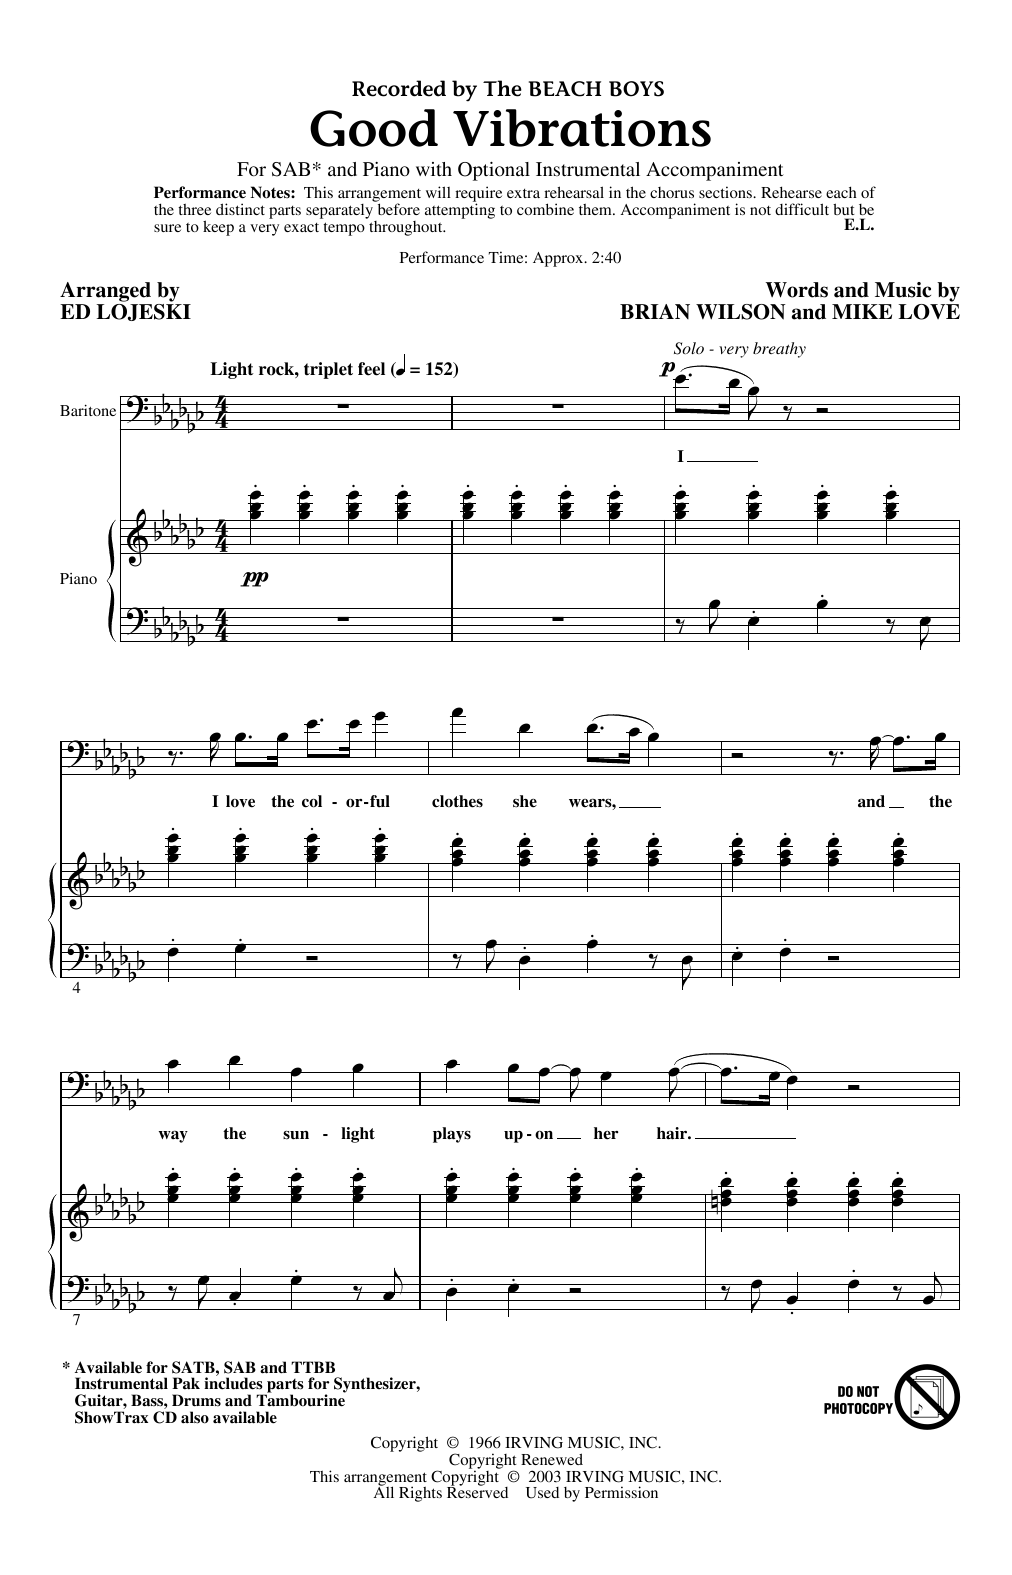 The Beach Boys Good Vibrations (arr. Ed Lojeski) Sheet Music Notes & Chords for TTBB Choir - Download or Print PDF